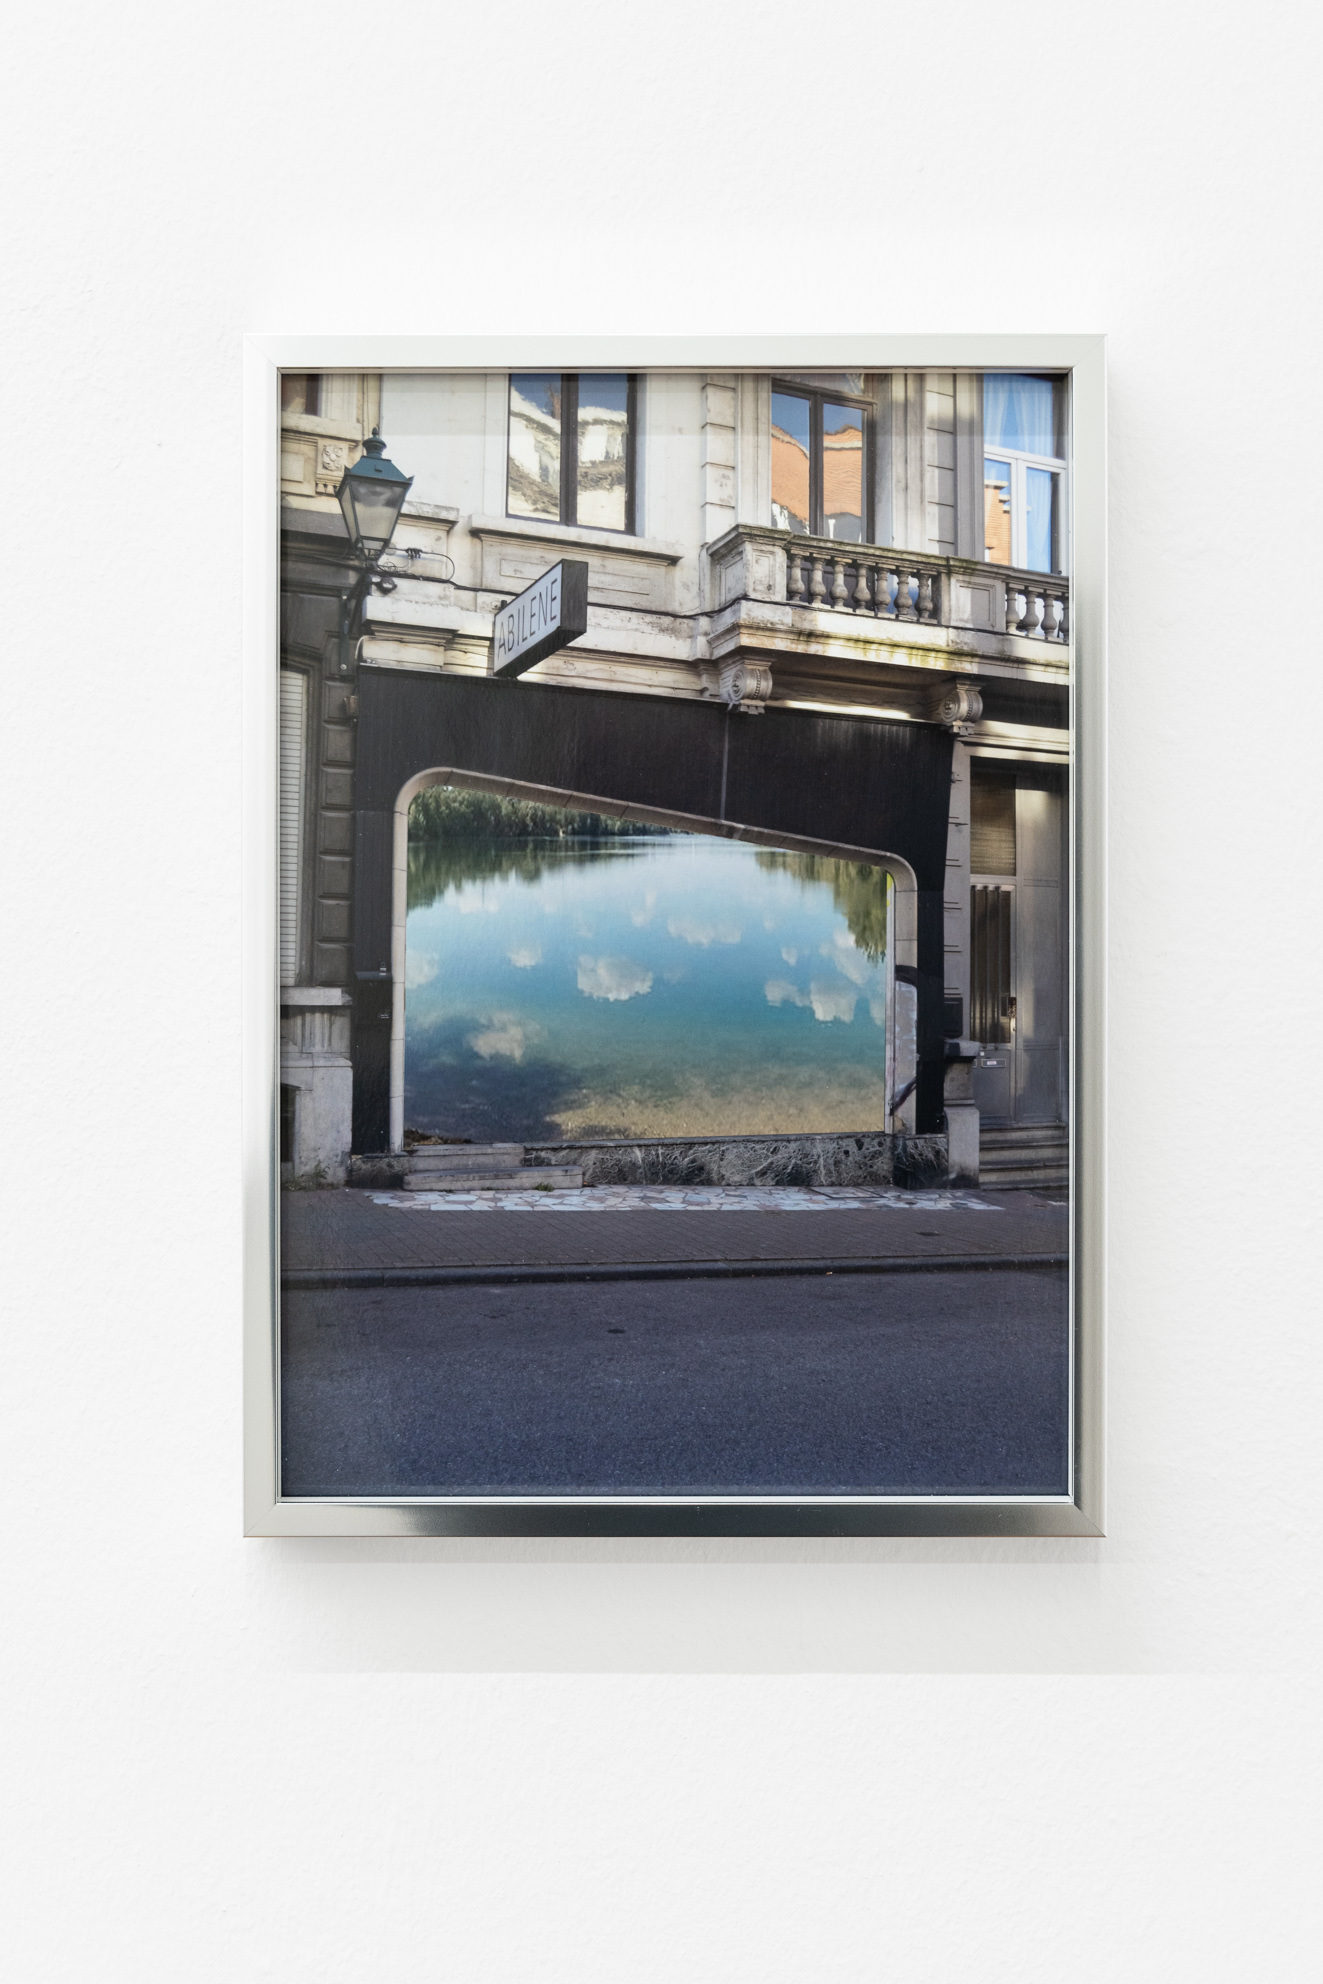 Judith Adelmann, "in this corner of the world #1", 2016/2023, photo collage, 29,7 x 21 cm